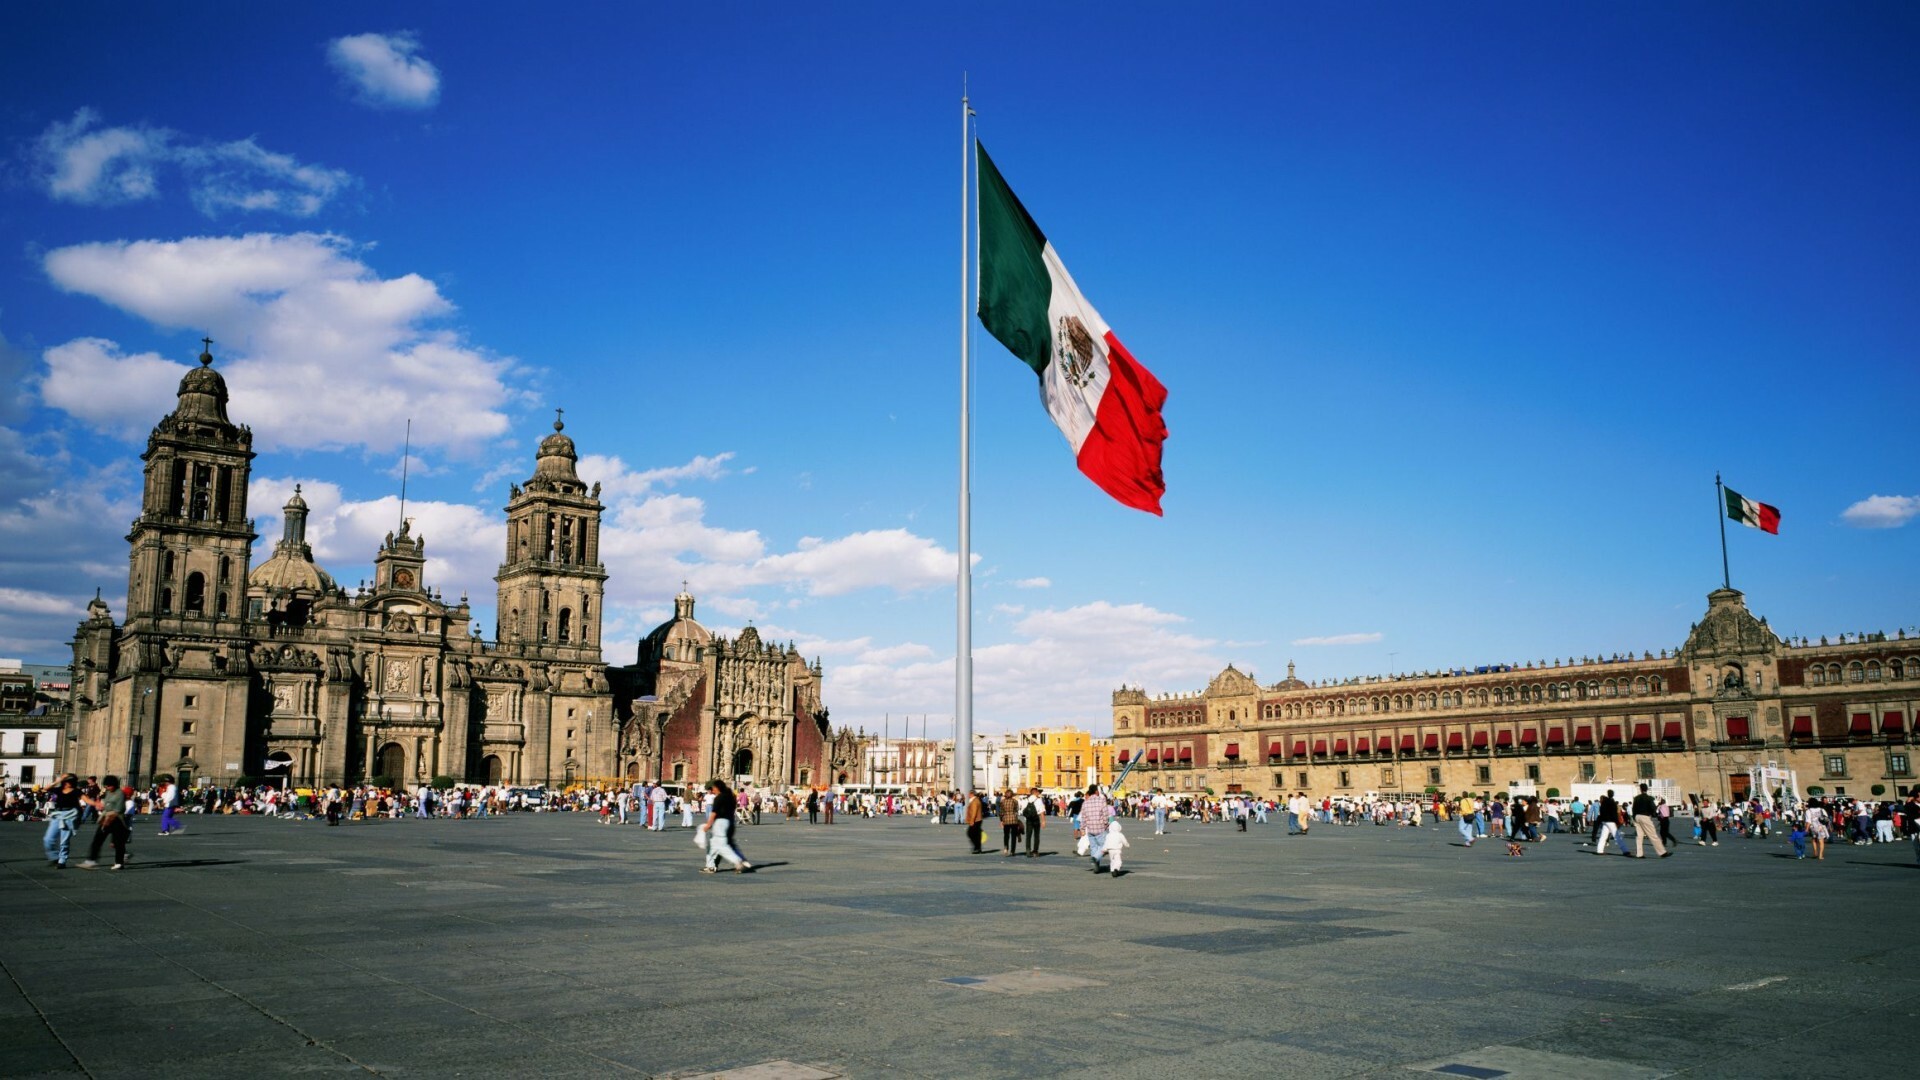 Mexico: Zocalo, Plaza de la Constitucion, Mexico City Metropolitan Cathedral. 1920x1080 Full HD Wallpaper.